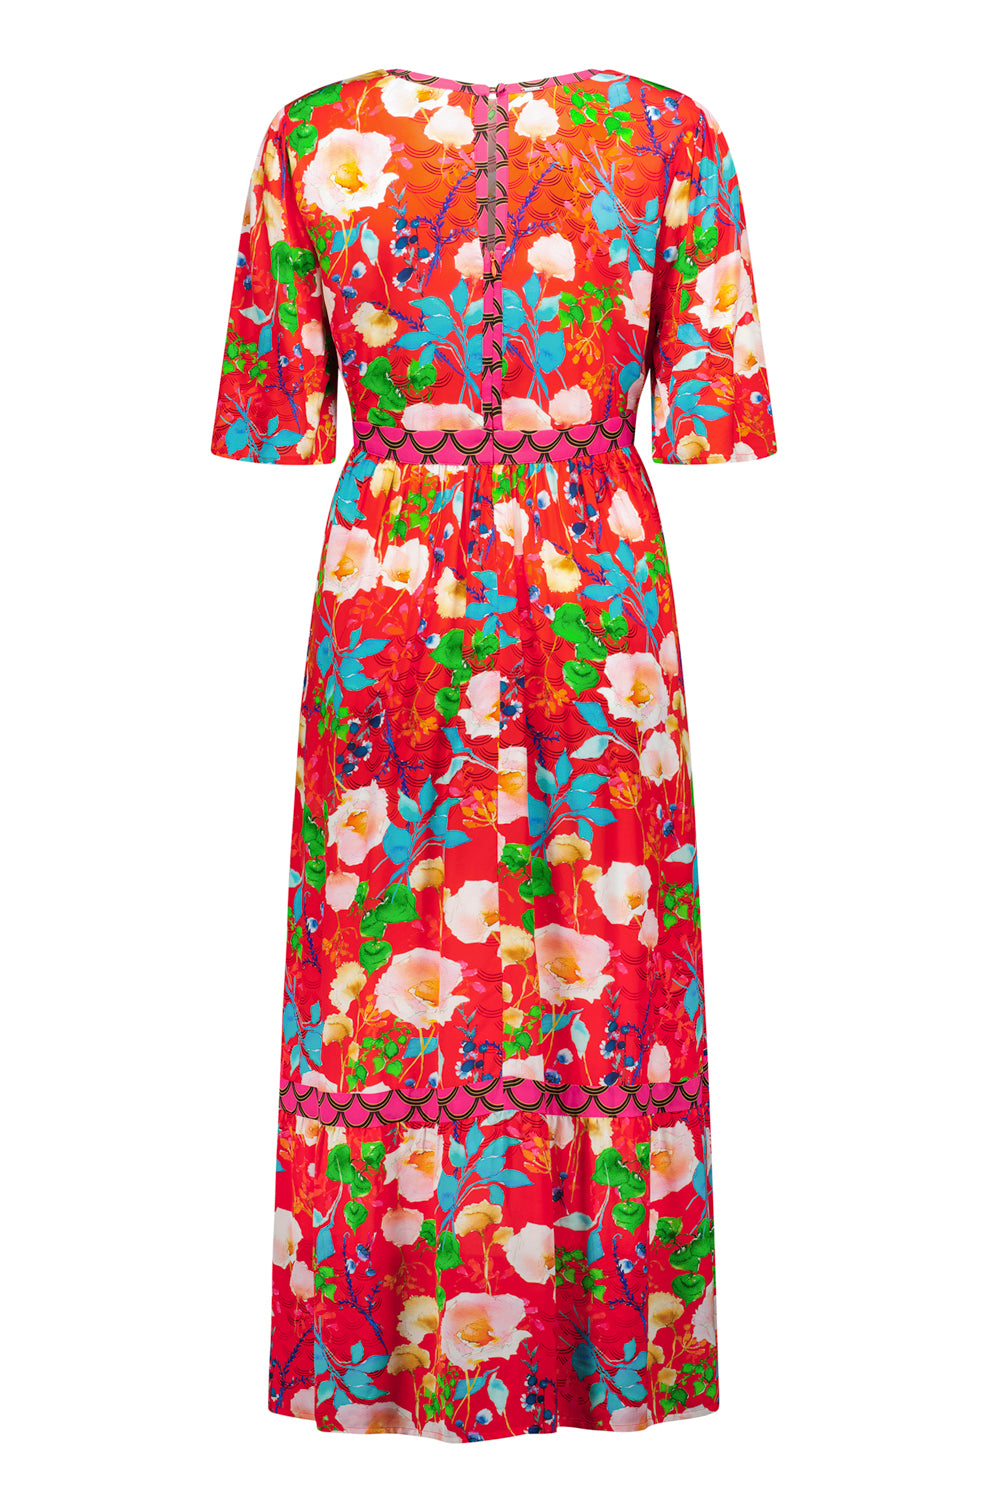 Aiko Dress - Red Floral Print - Dress VERGE